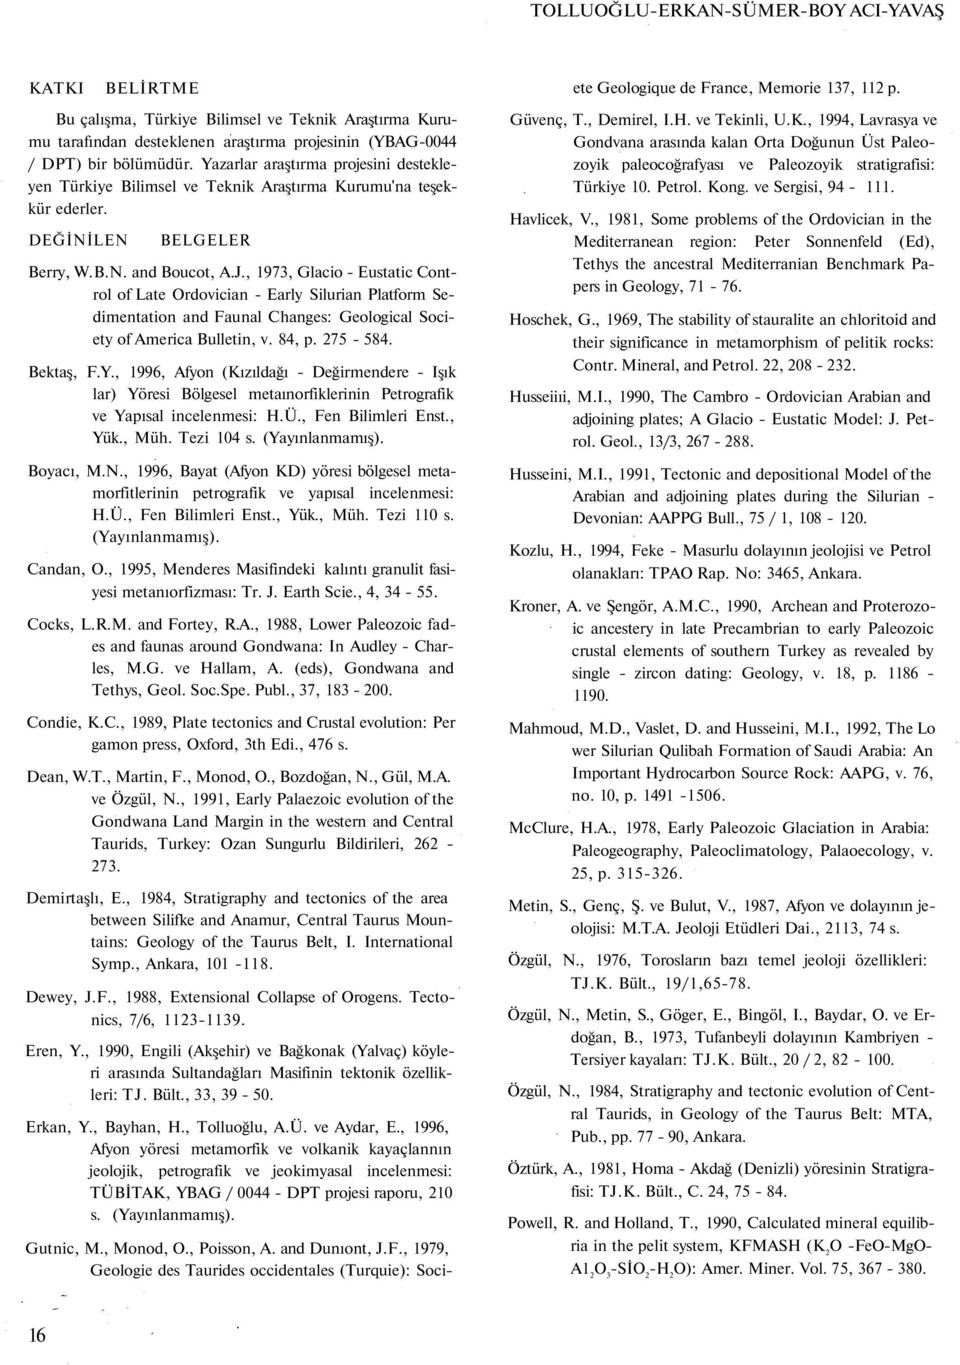 , 1973, Glacio - Eustatic Control of Late Ordovician - Early Silurian Platform Sedimentation and Faunal Changes: Geological Society of America Bulletin, v. 84, p. 275-584. Bektaş, F.Y.